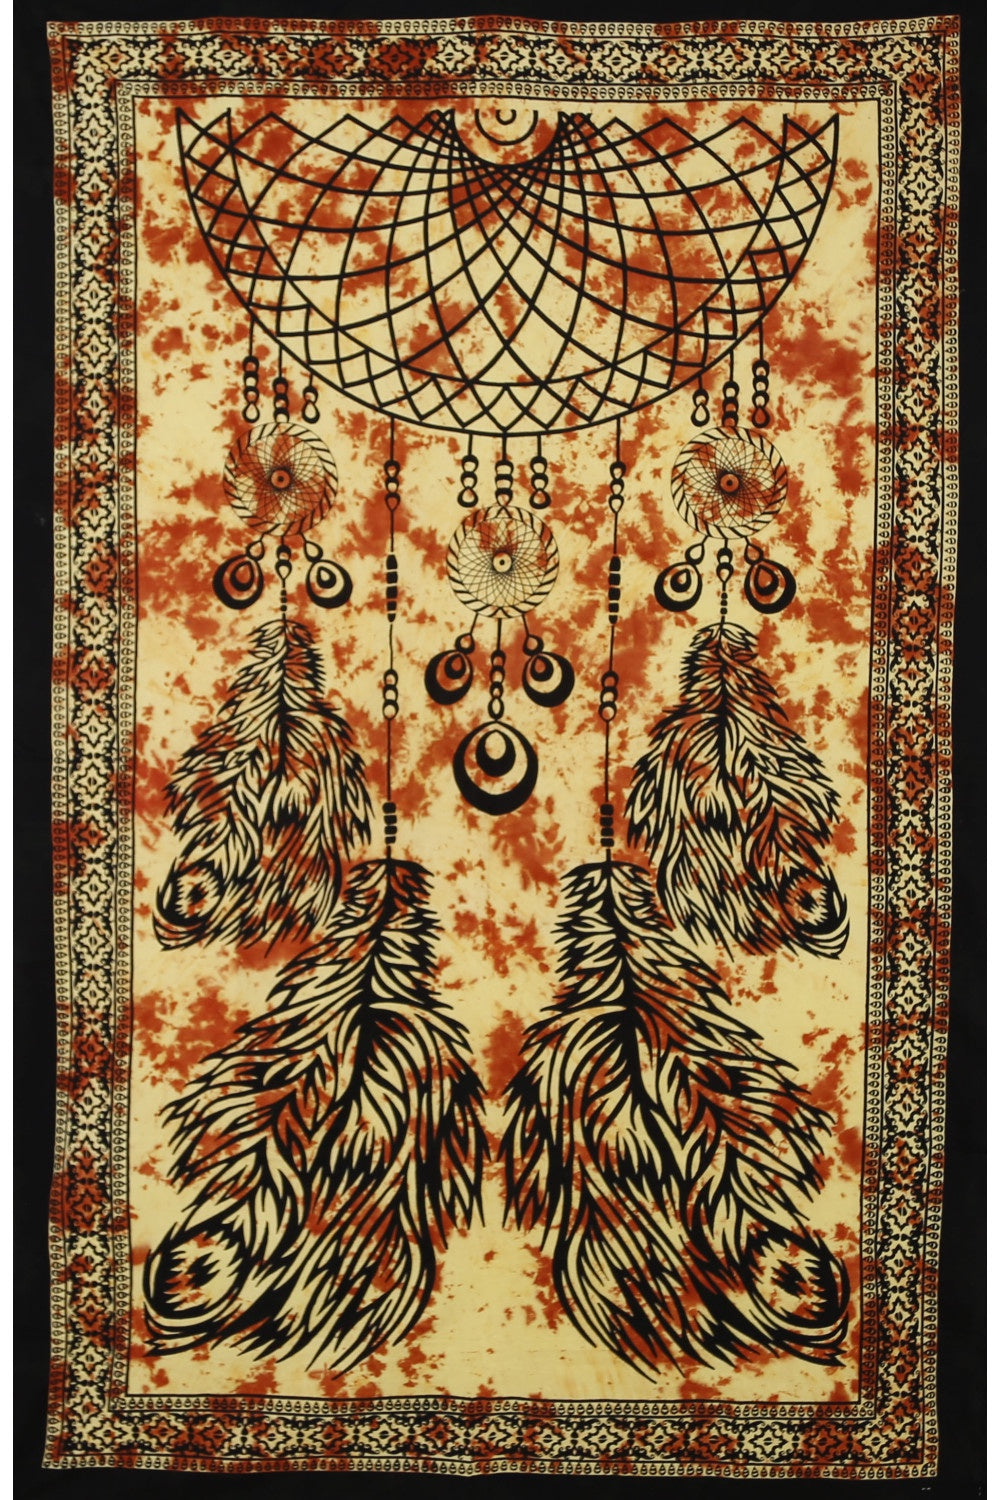 ZFL Orange Dreamcatcher Tapestry